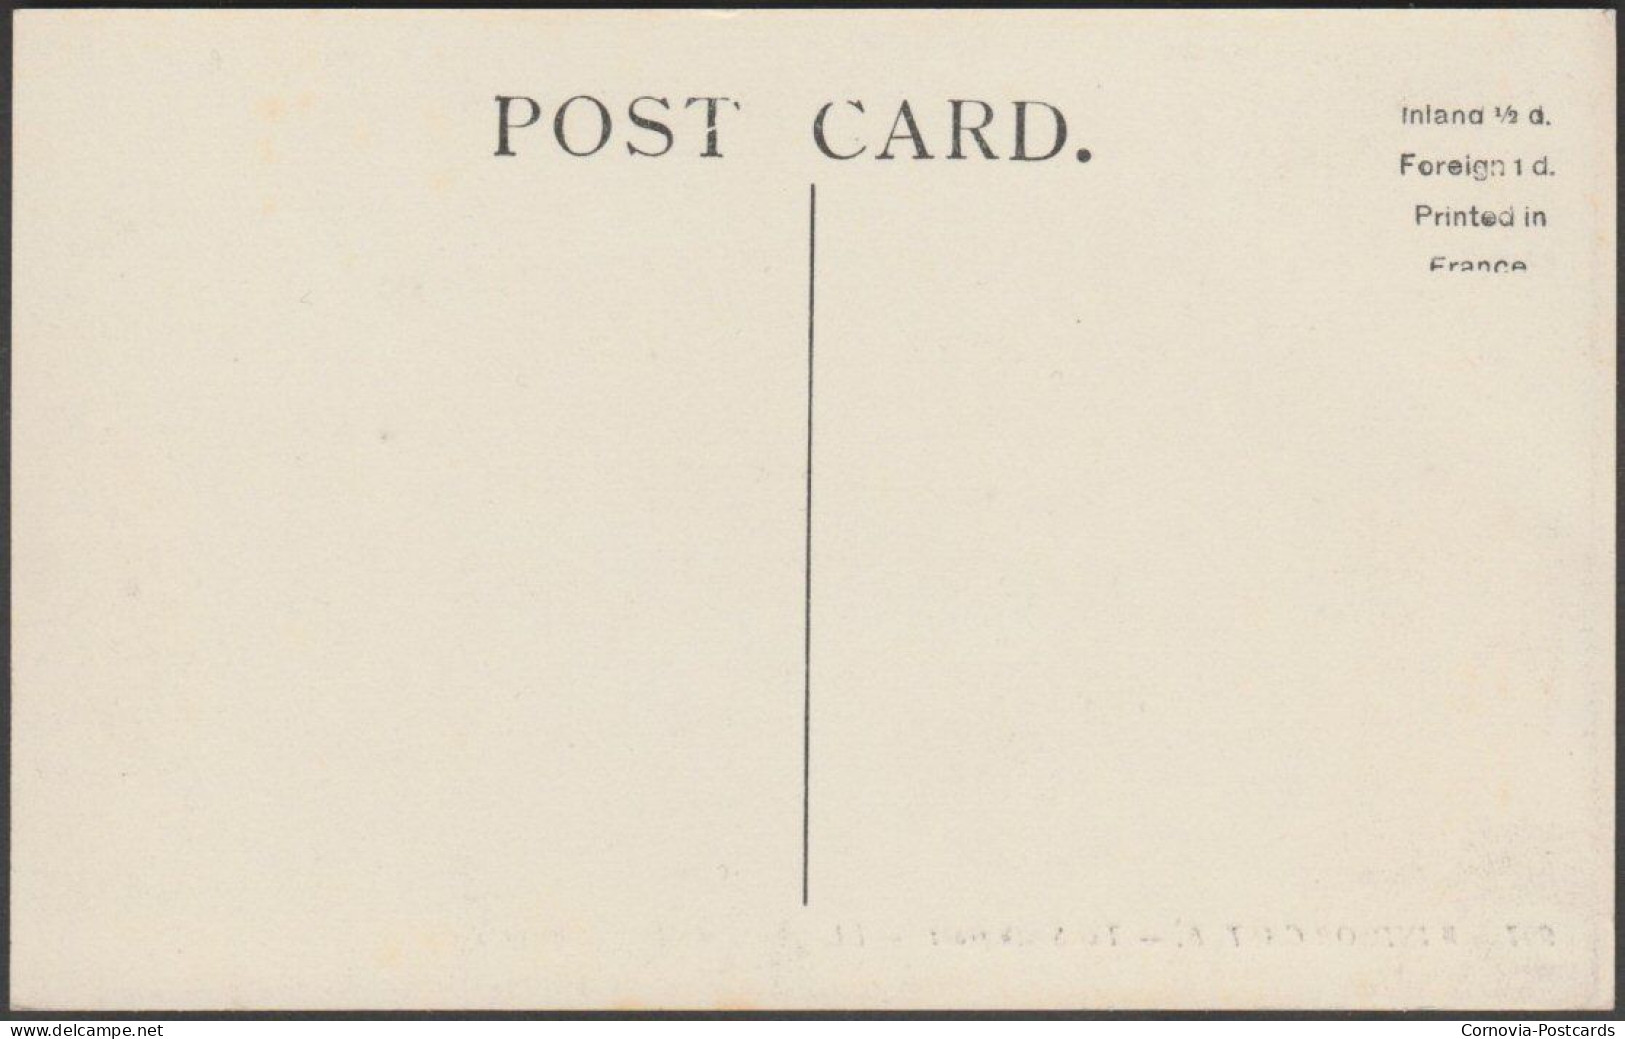 The South Front, Windsor Castle, Berkshire, C.1910 - Lévy Postcard LL907 - Windsor Castle